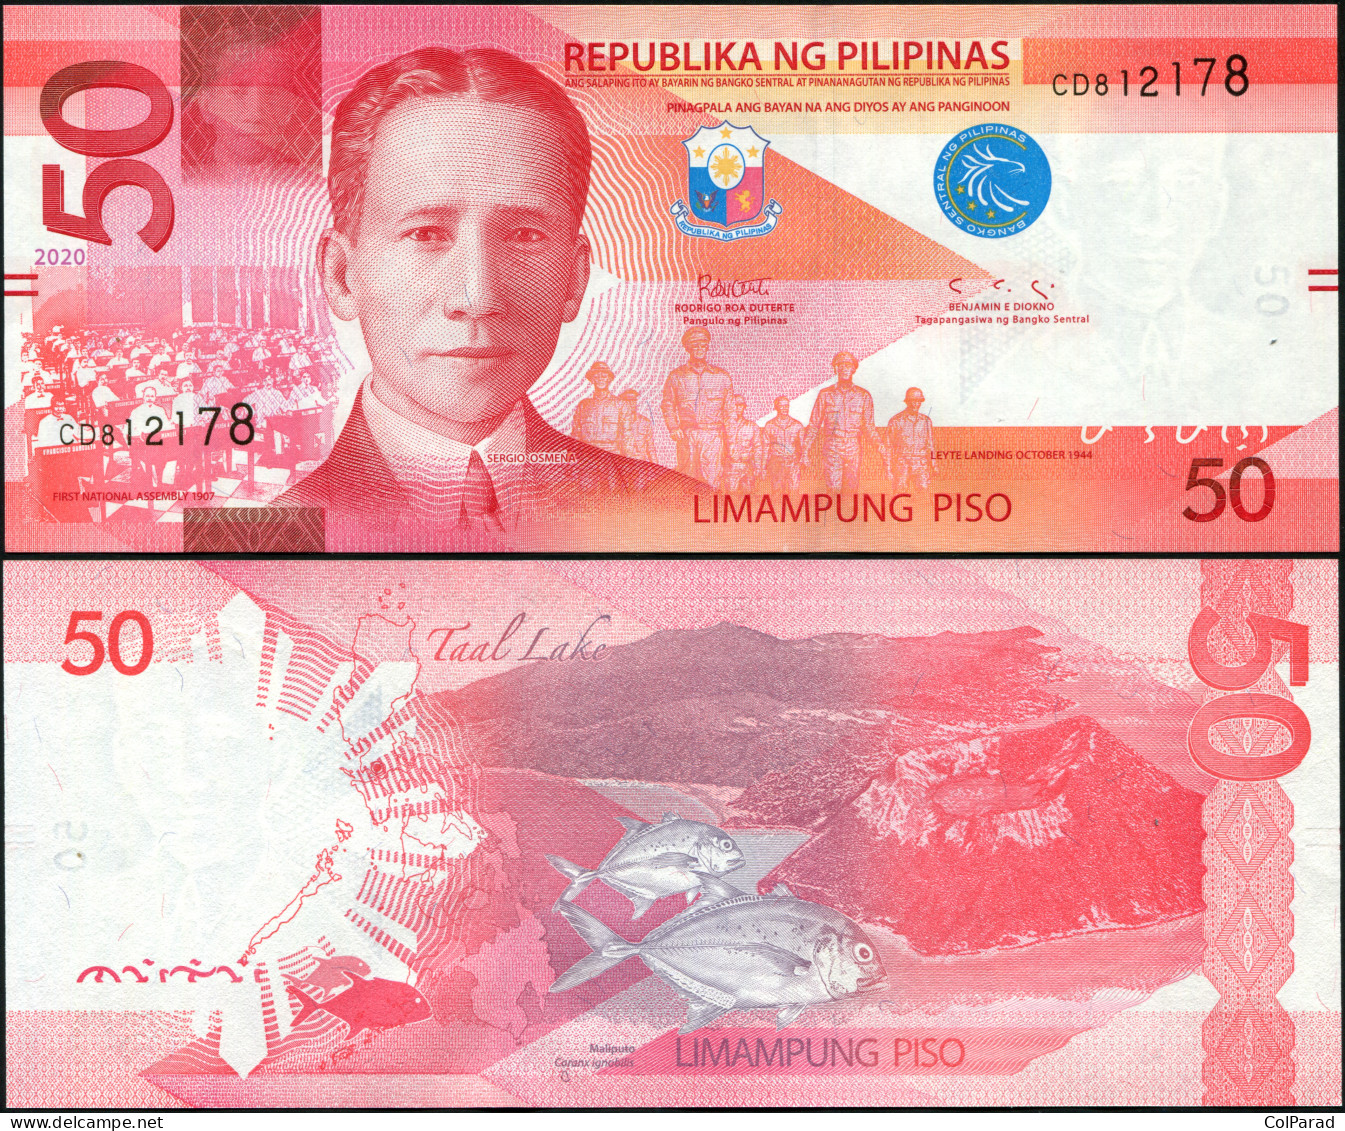 PHILIPPINES 50 PISO - 2020 - Paper Unc - P.NL Banknote - Philippines